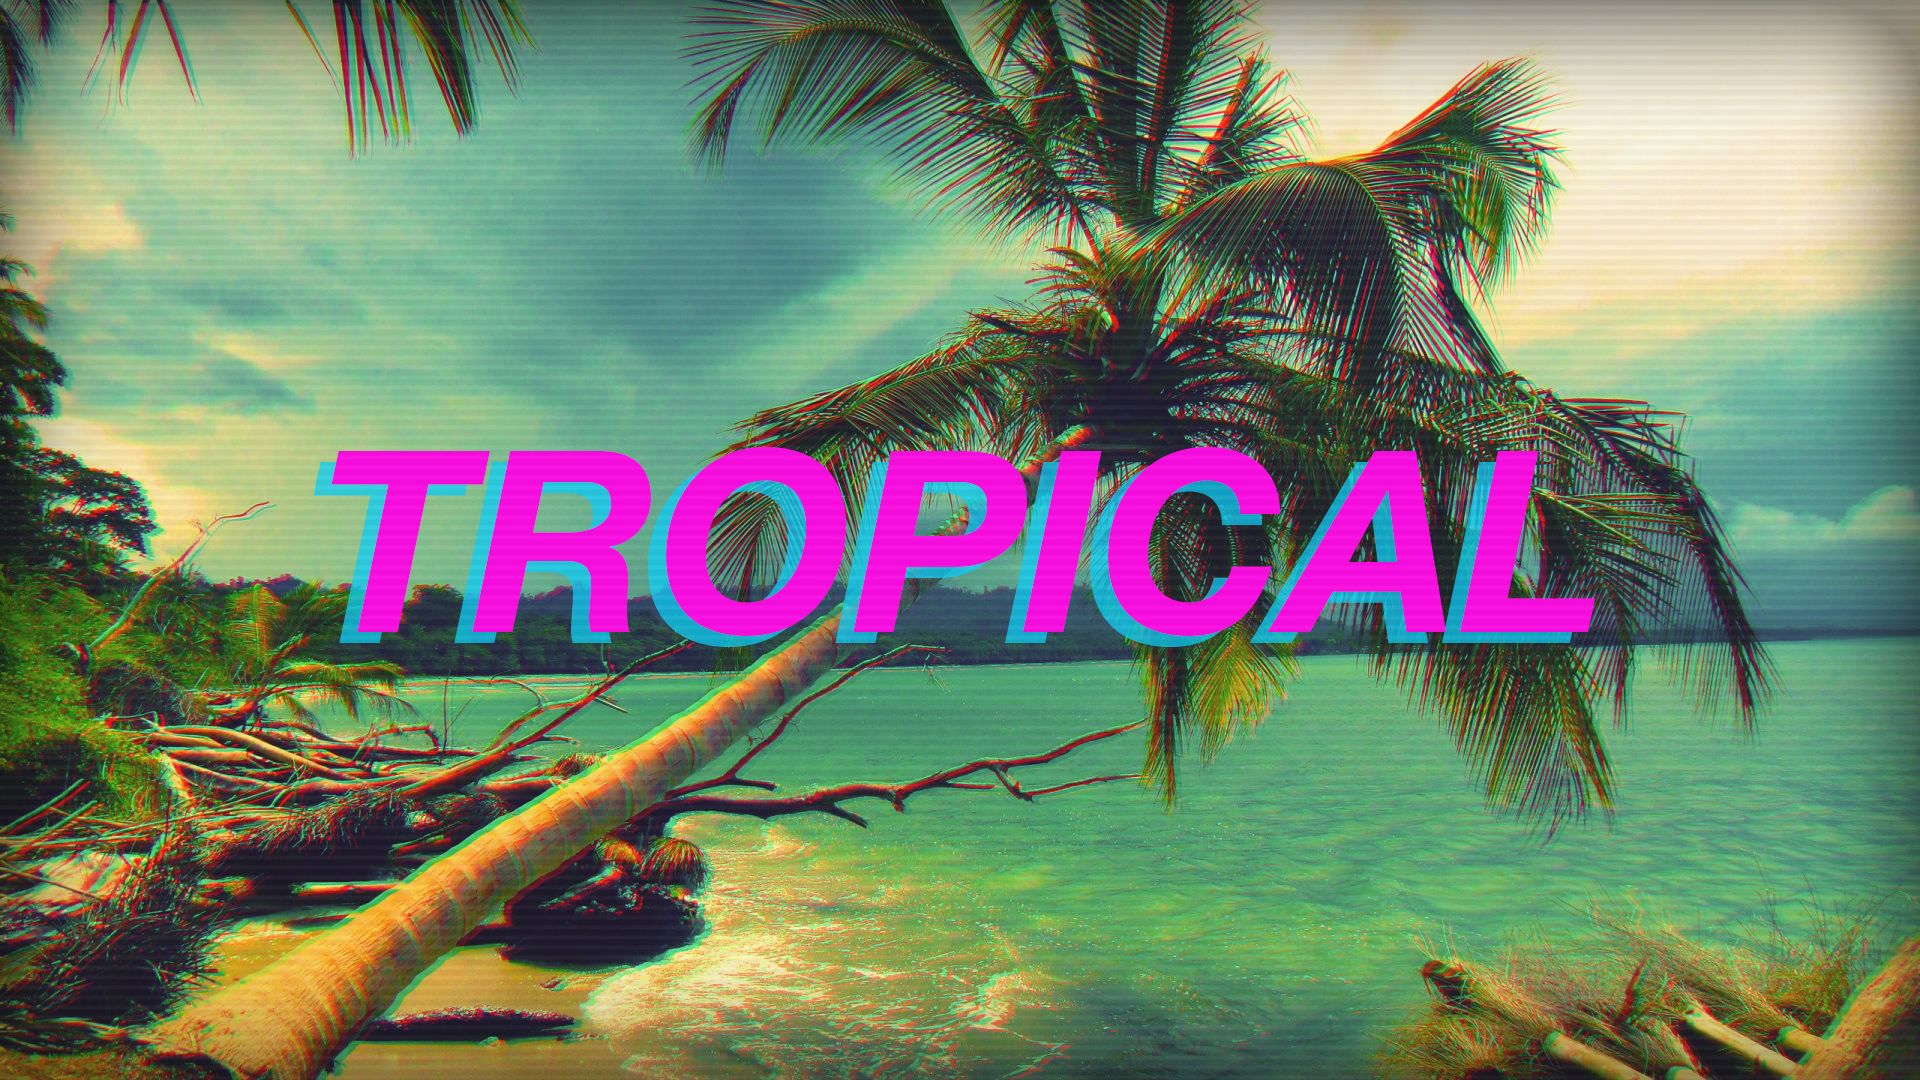 artistic, vaporwave, tropical